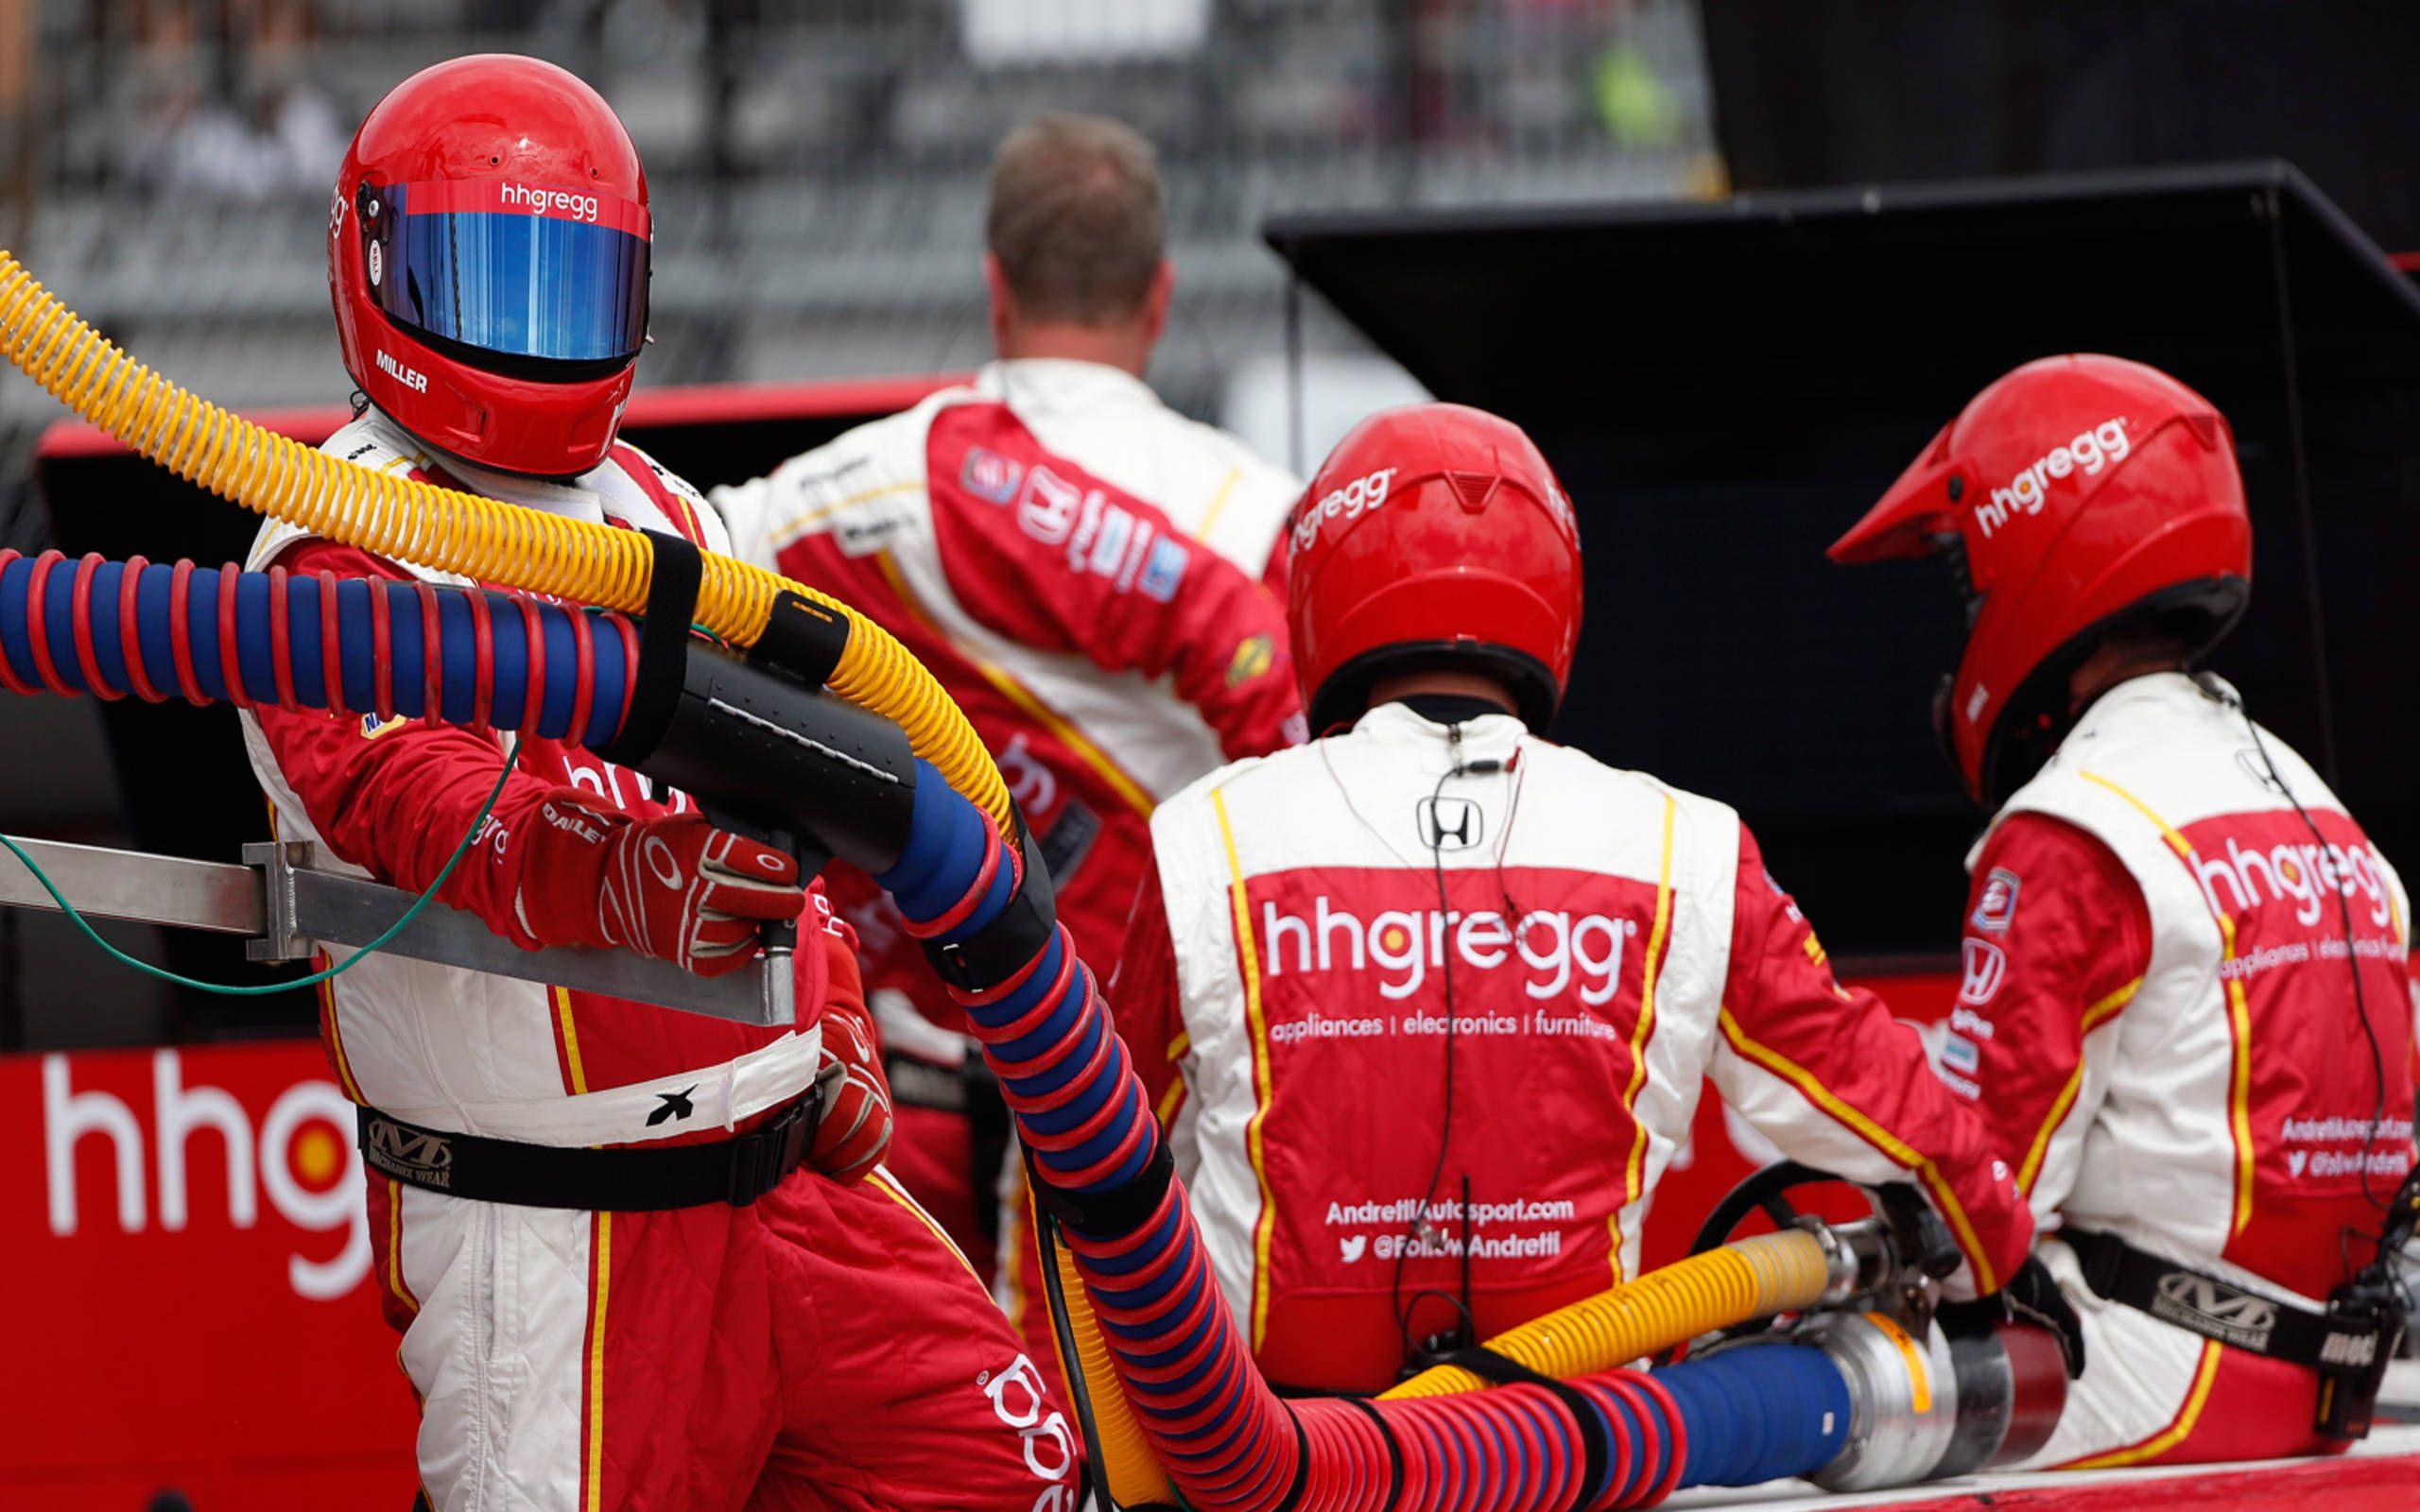 hhgregg bankruptcy costs Andretti Autosport IndyCar team major